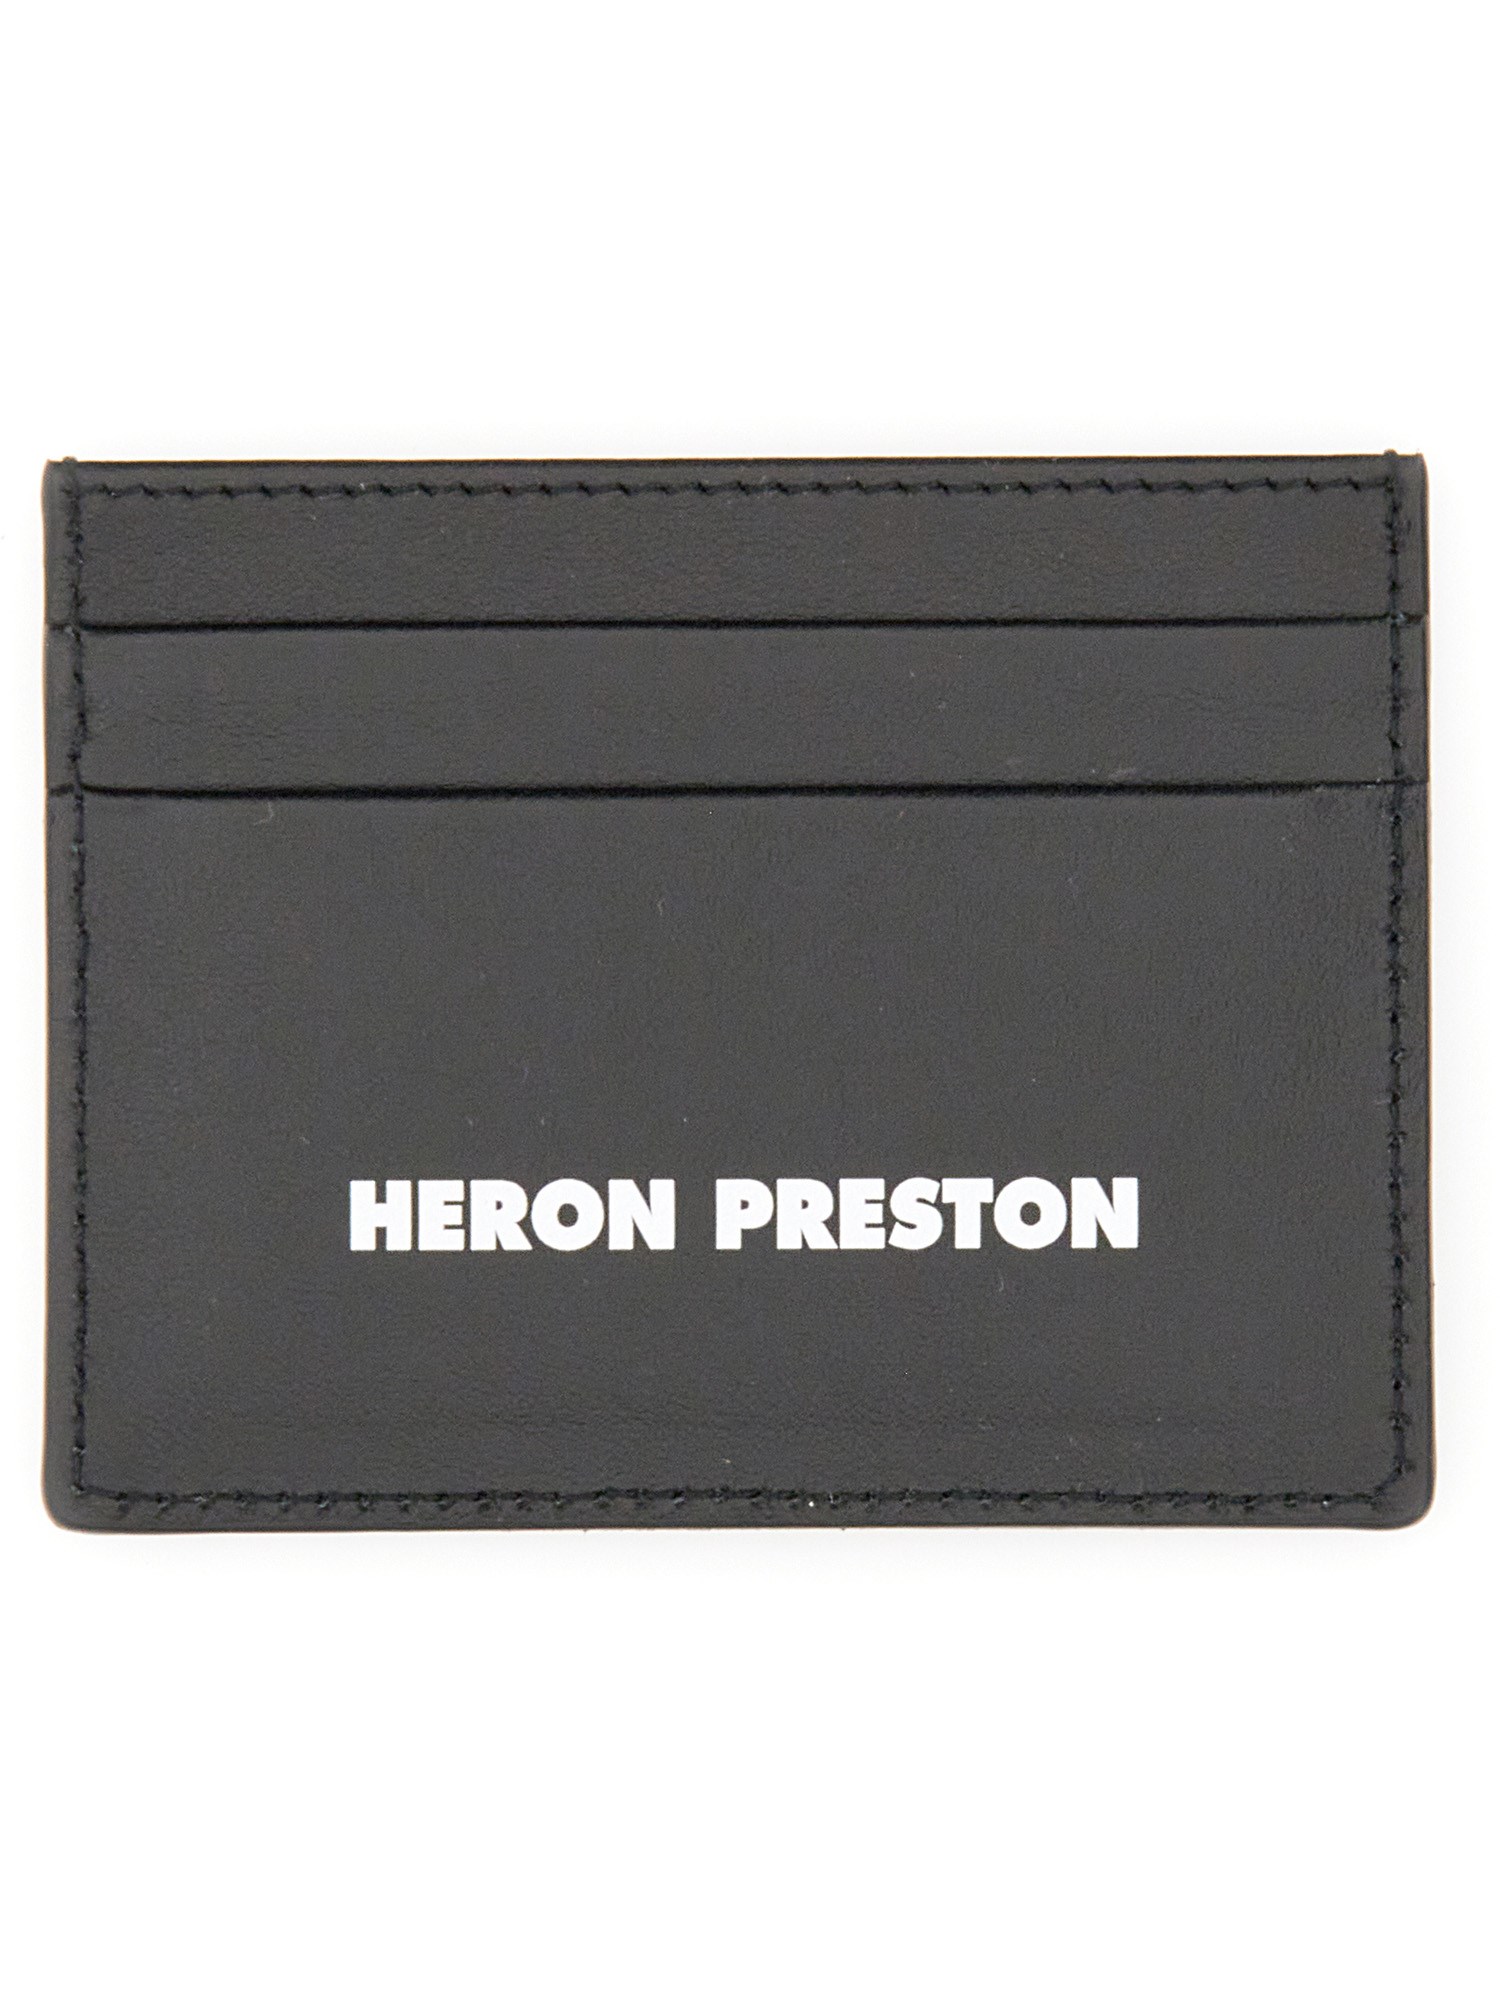 heron preston card holder with logo print